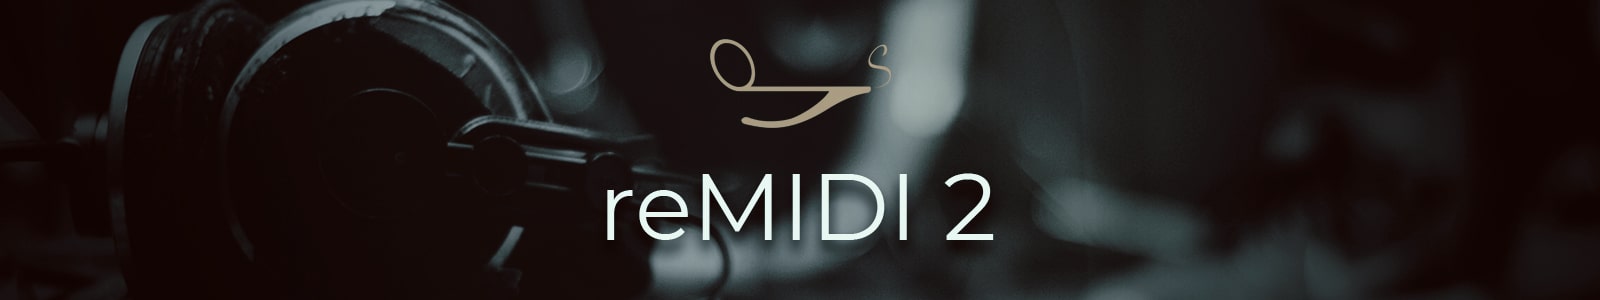 ReMIDI 2 by SongWish